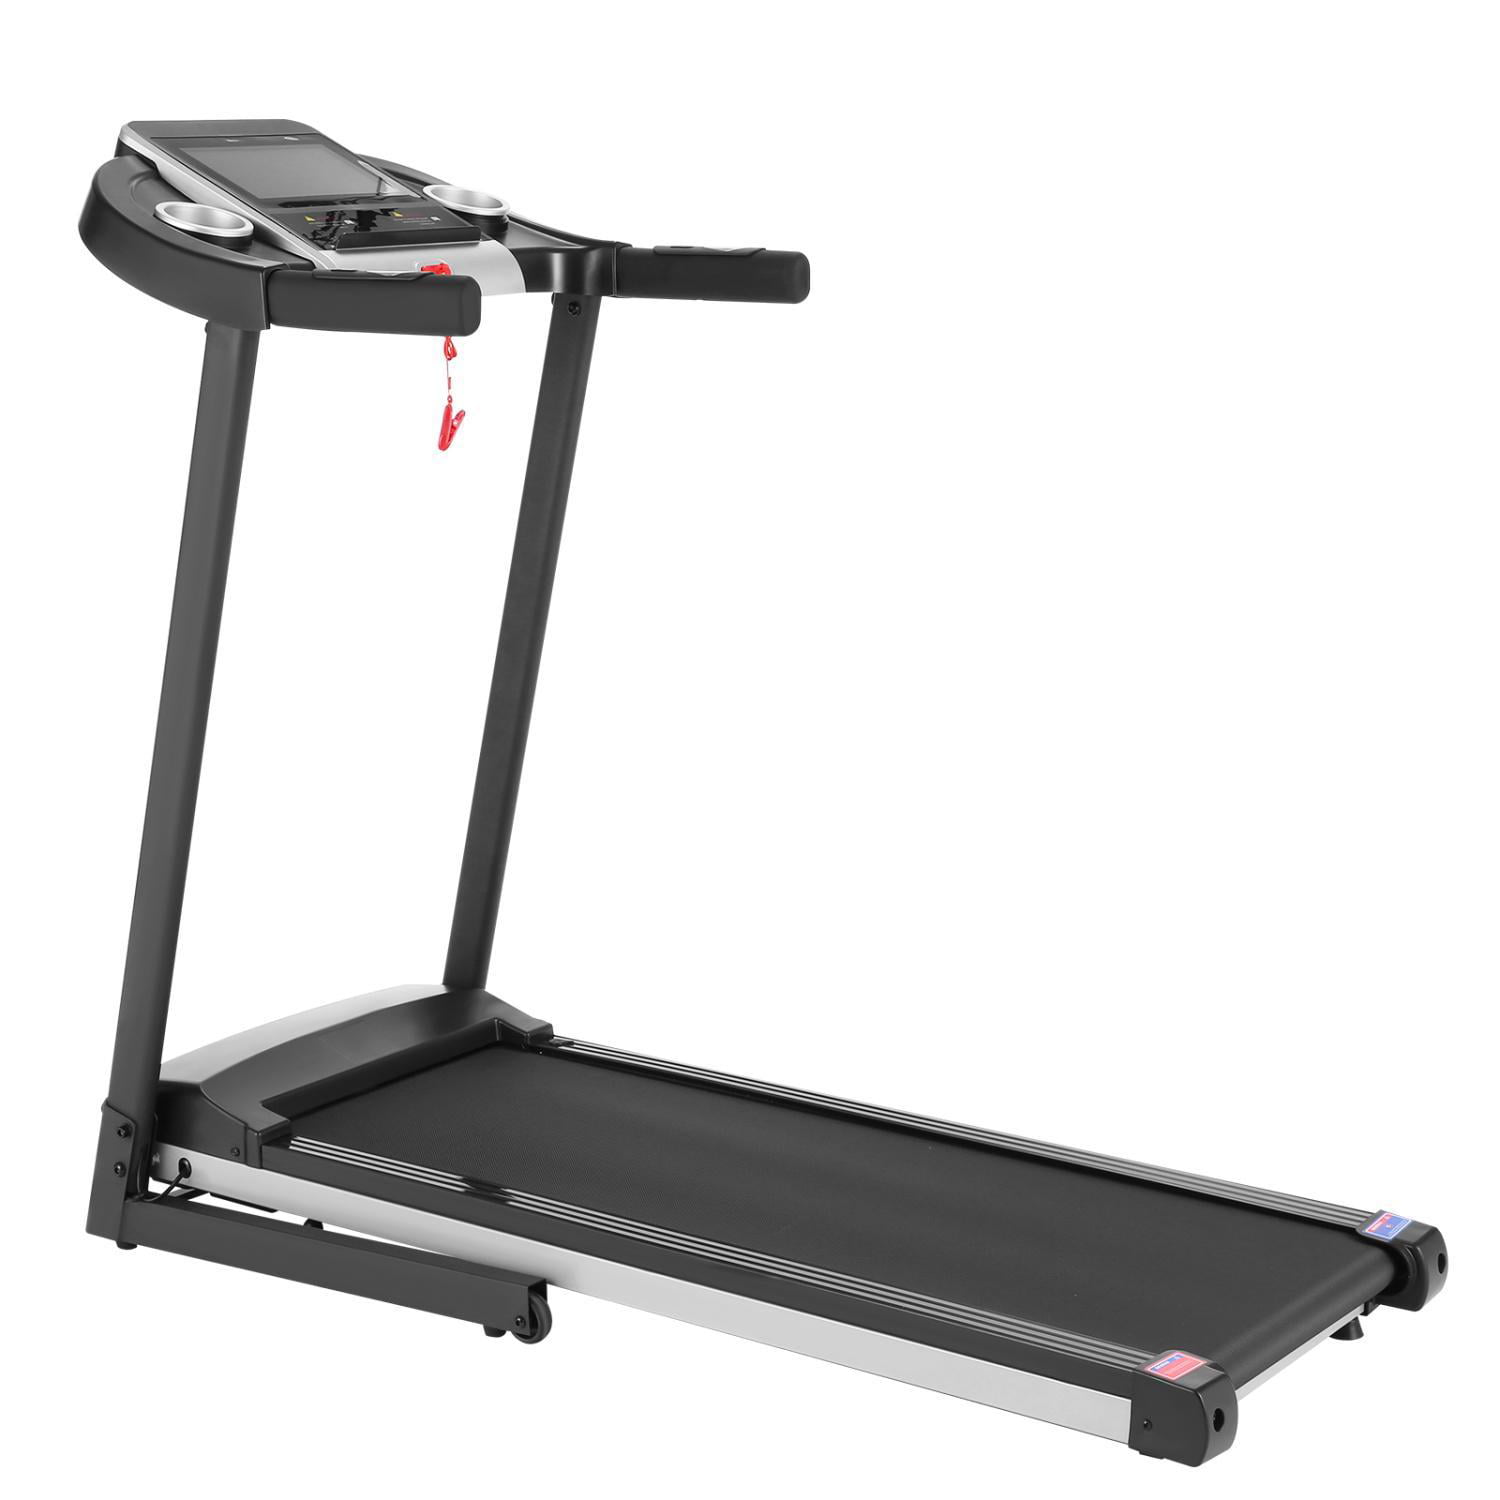 Details about   3.25HP Electric Treadmill Folding Running Machine w/ Bluetooth WIFI &Touchscreen